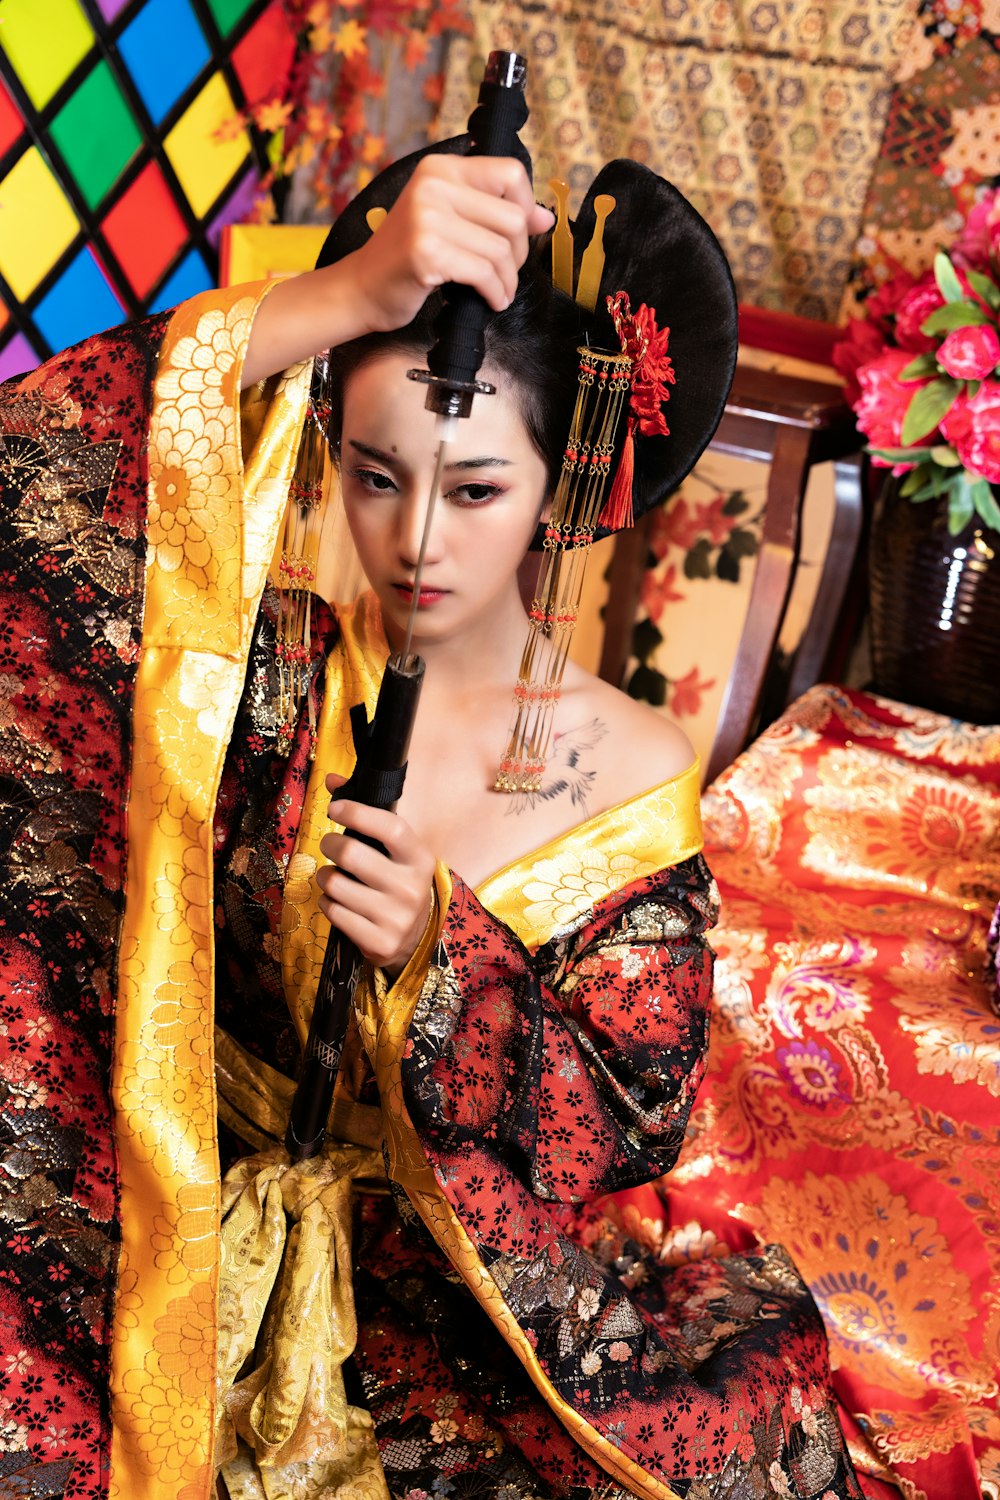 a woman in a geisha costume holding a black umbrella